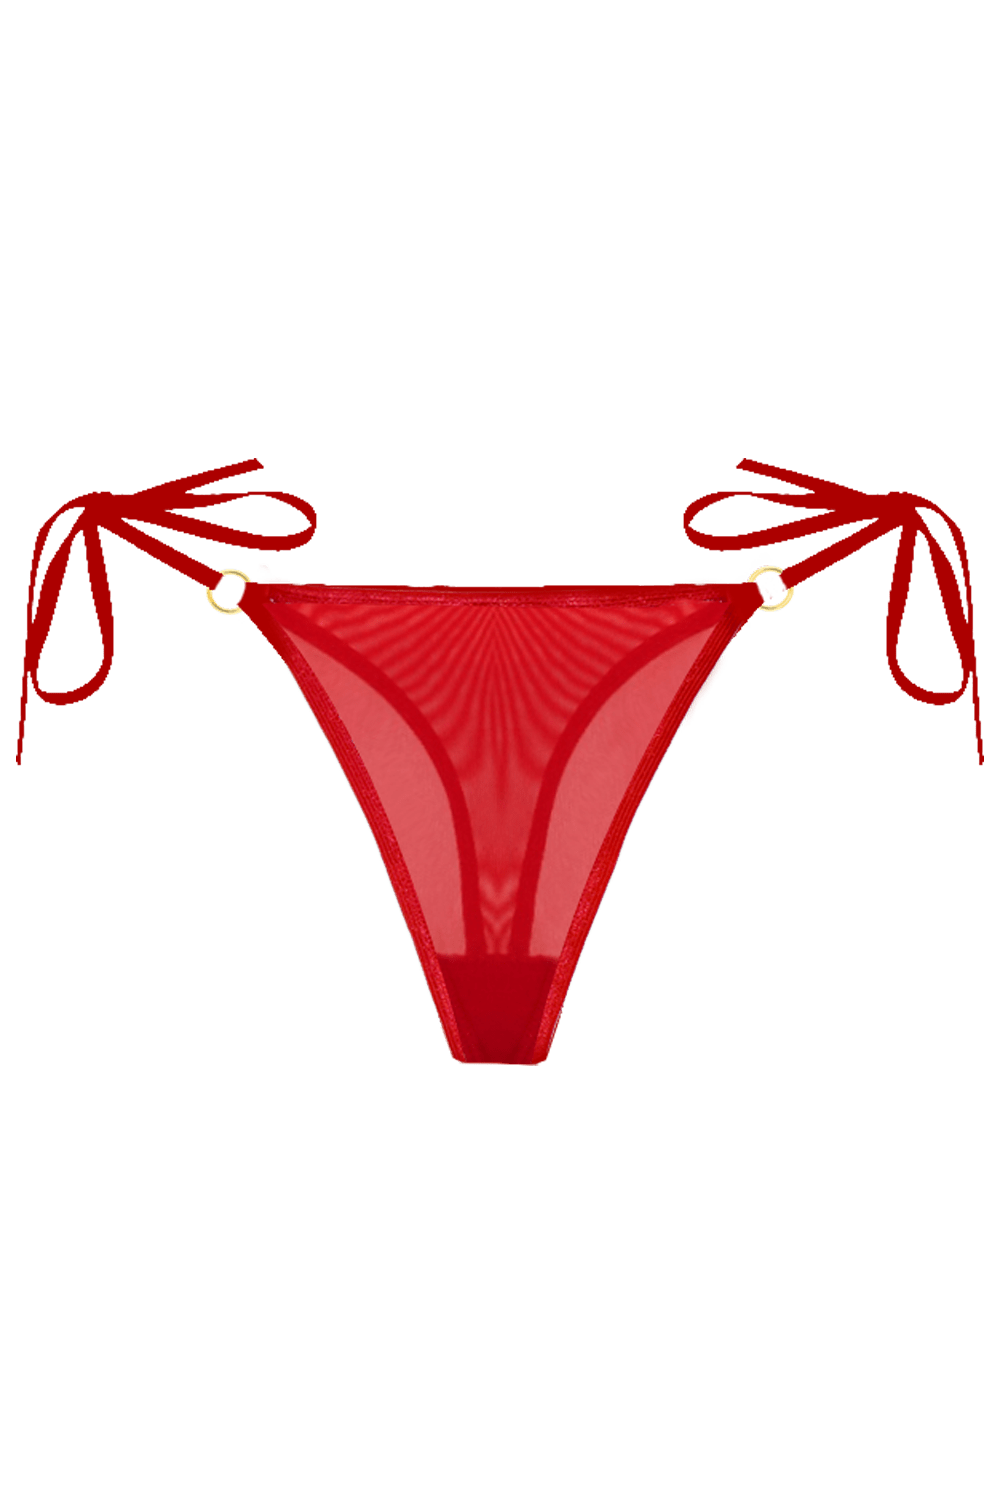 Women’s Panties Lui Mesh Red Small Boscco